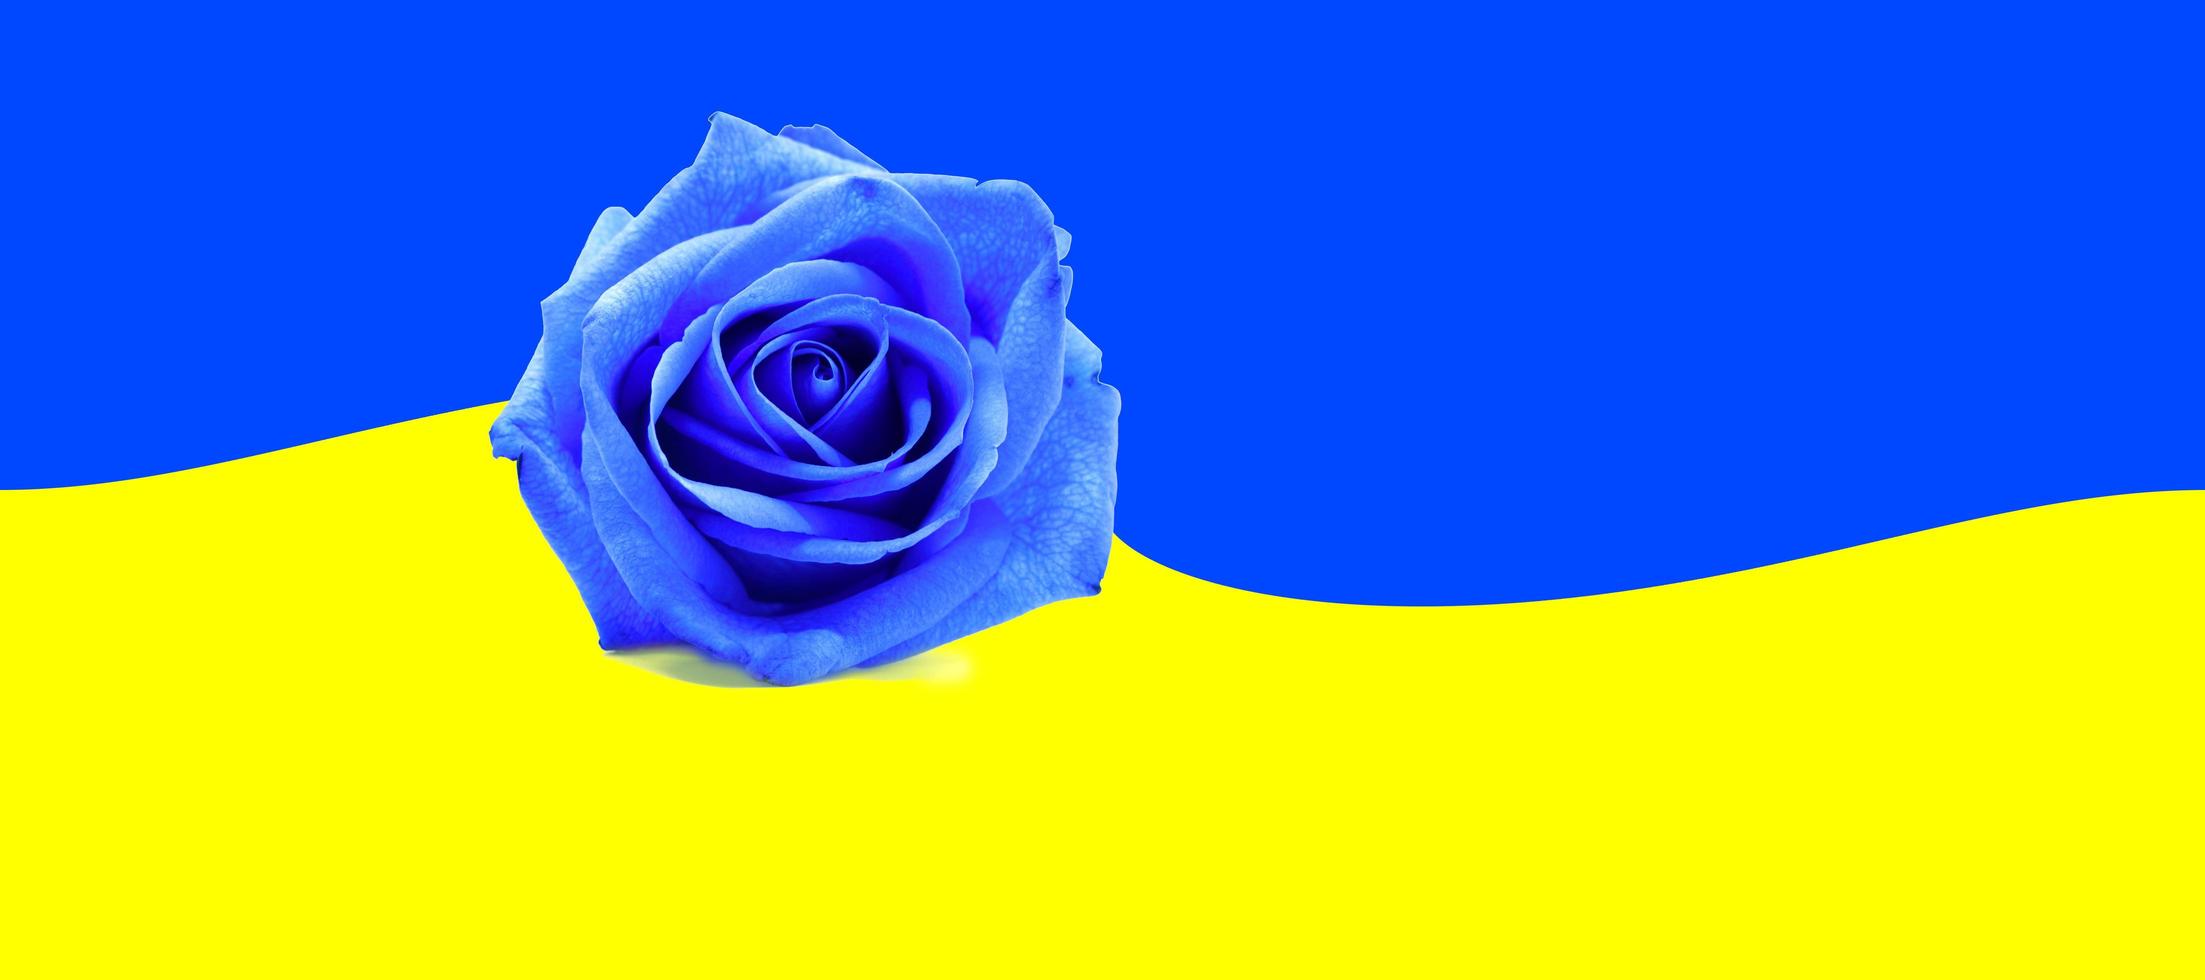 roze blauw en oekraïne vlag. mooie oekraïense.de nationale vlag van oekraïne. symbool, poster, vlag van de Oekraïense nationale flag.flag van Oekraïne met een blauwe roos. Oekraïens Russisch conflictsymbool. foto